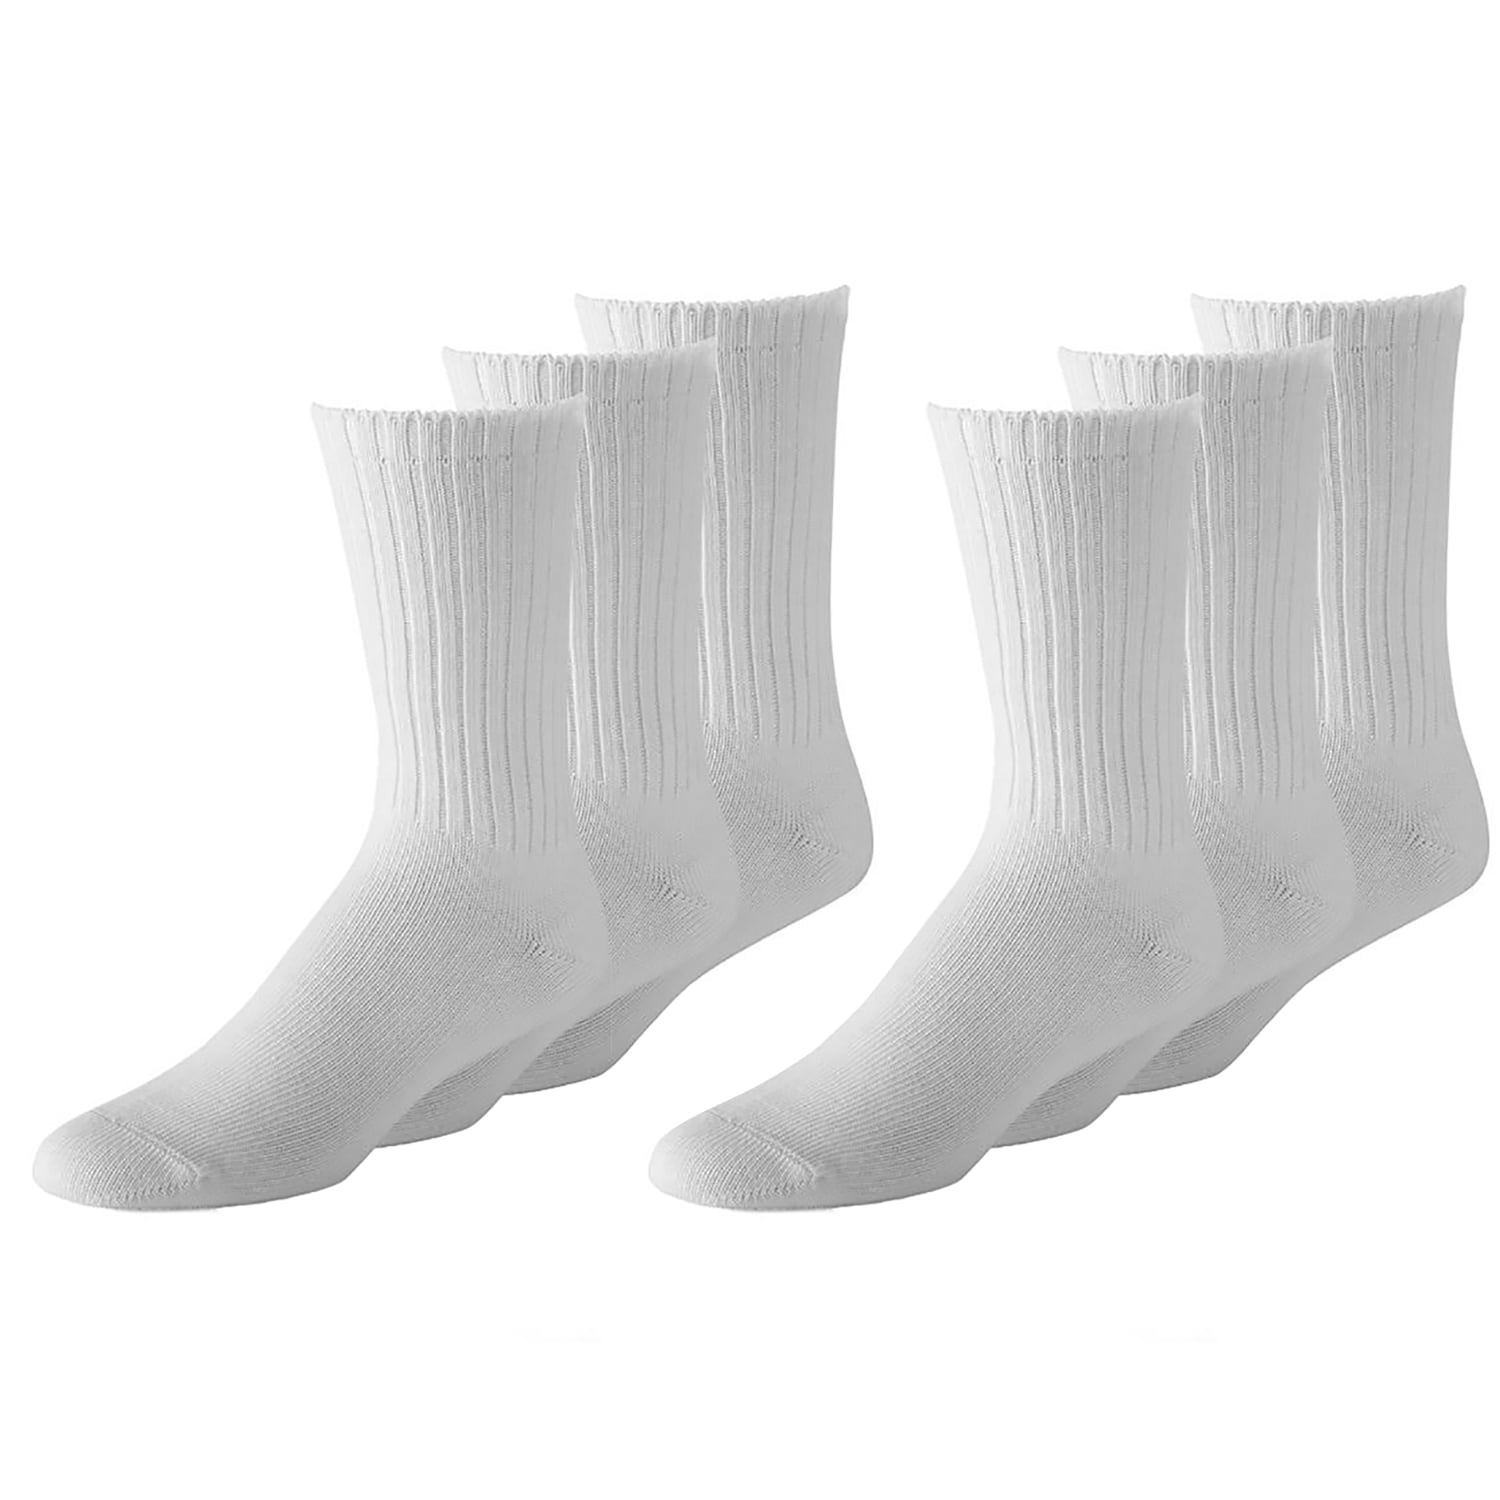 Wholesale Lot Assorted Colors Men's Crew Athletic Sport Socks Size 9-11 10-13 